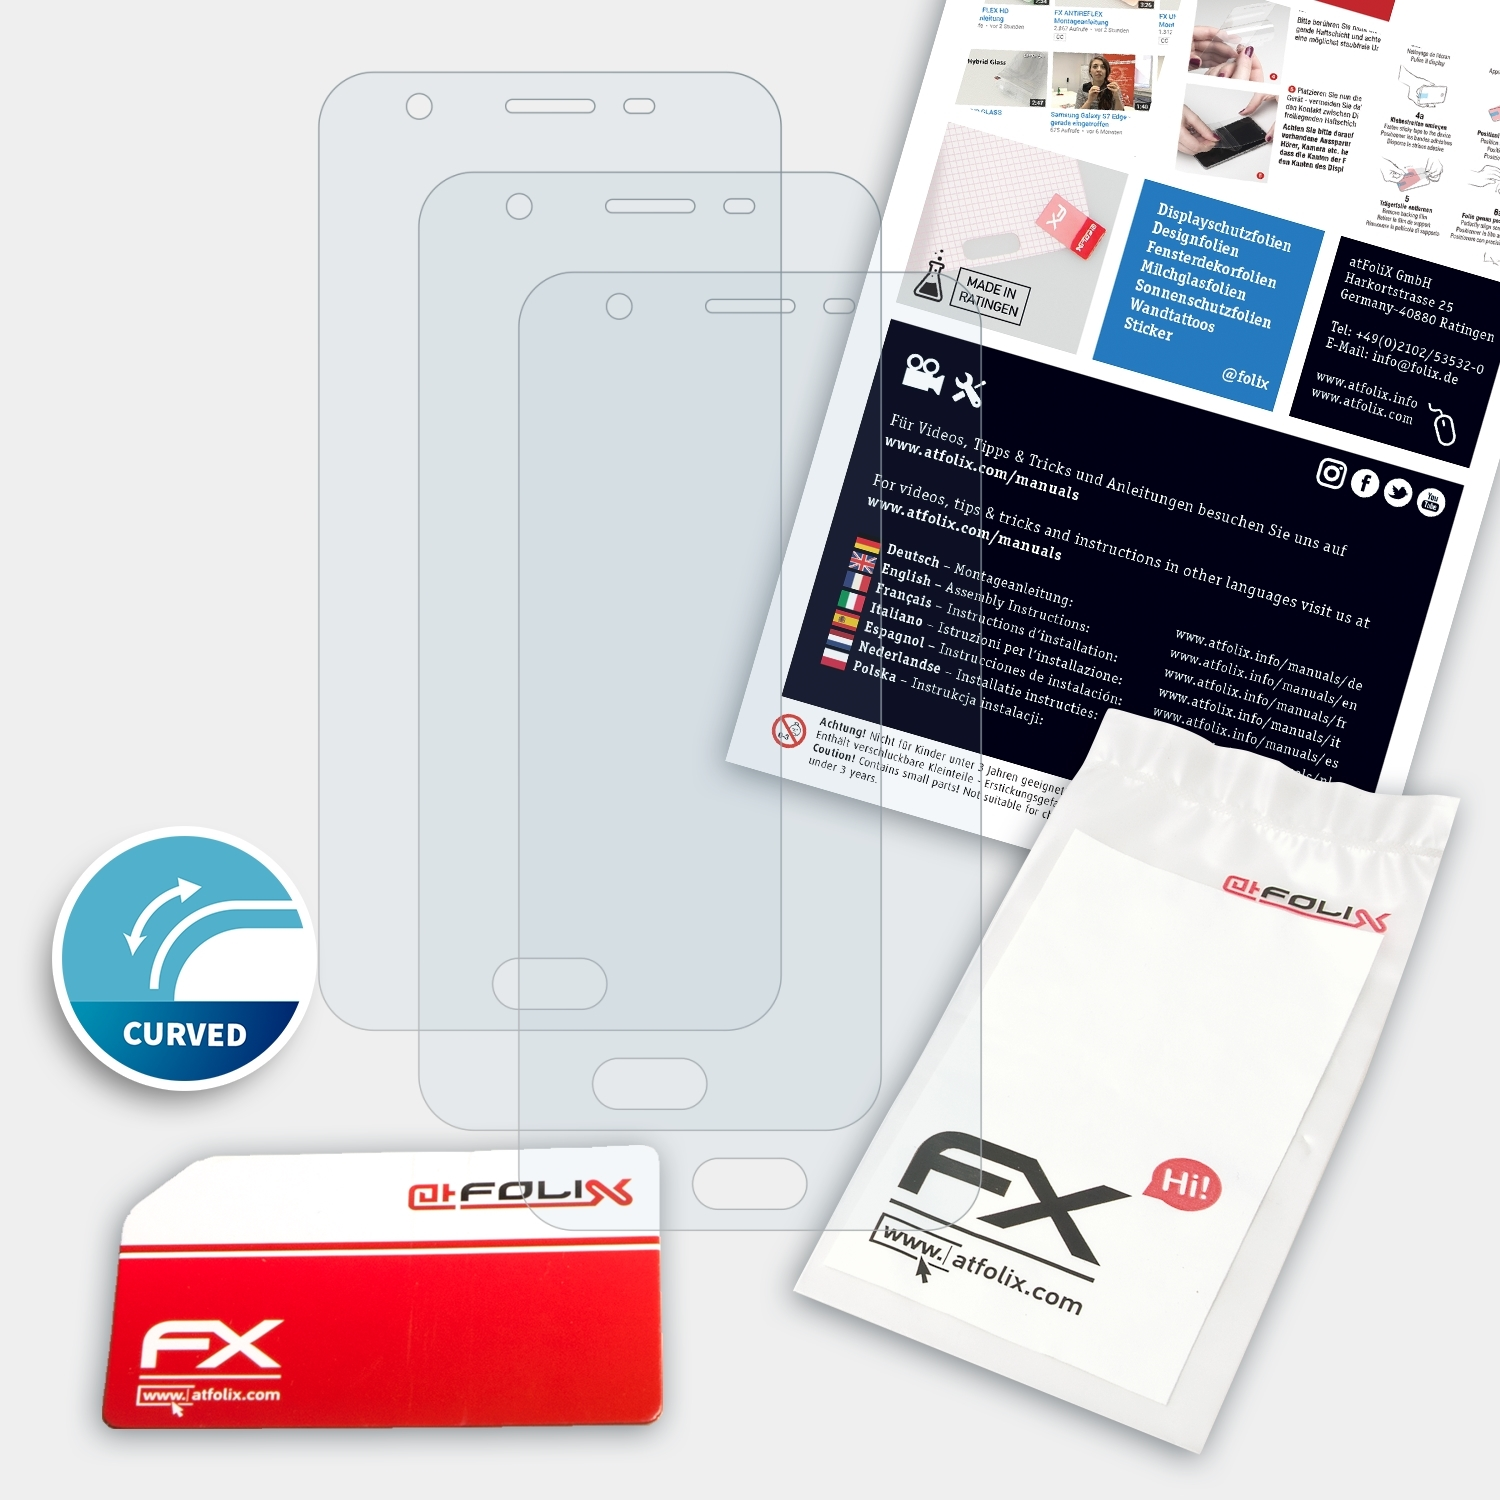 Star) 3x FX-ActiFleX ATFOLIX J3 Galaxy Samsung Displayschutz(für